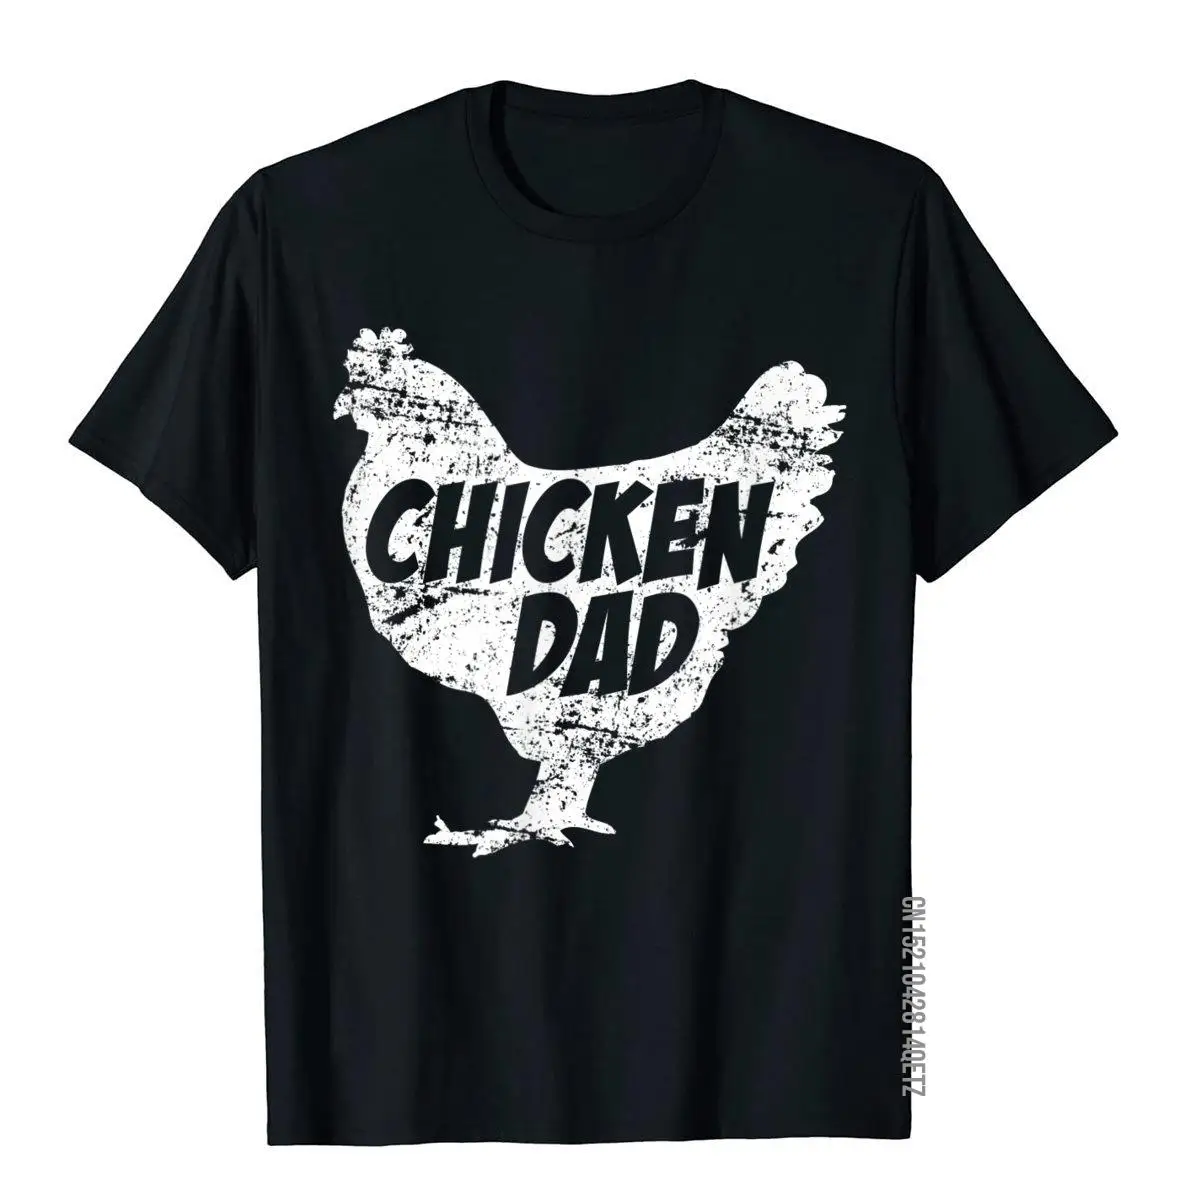 

Chicken Dad T-Shirt Funny Farm Farmer Tee Father Gift Gift Cotton Men Tops Shirts Fashionable Classic T Shirt